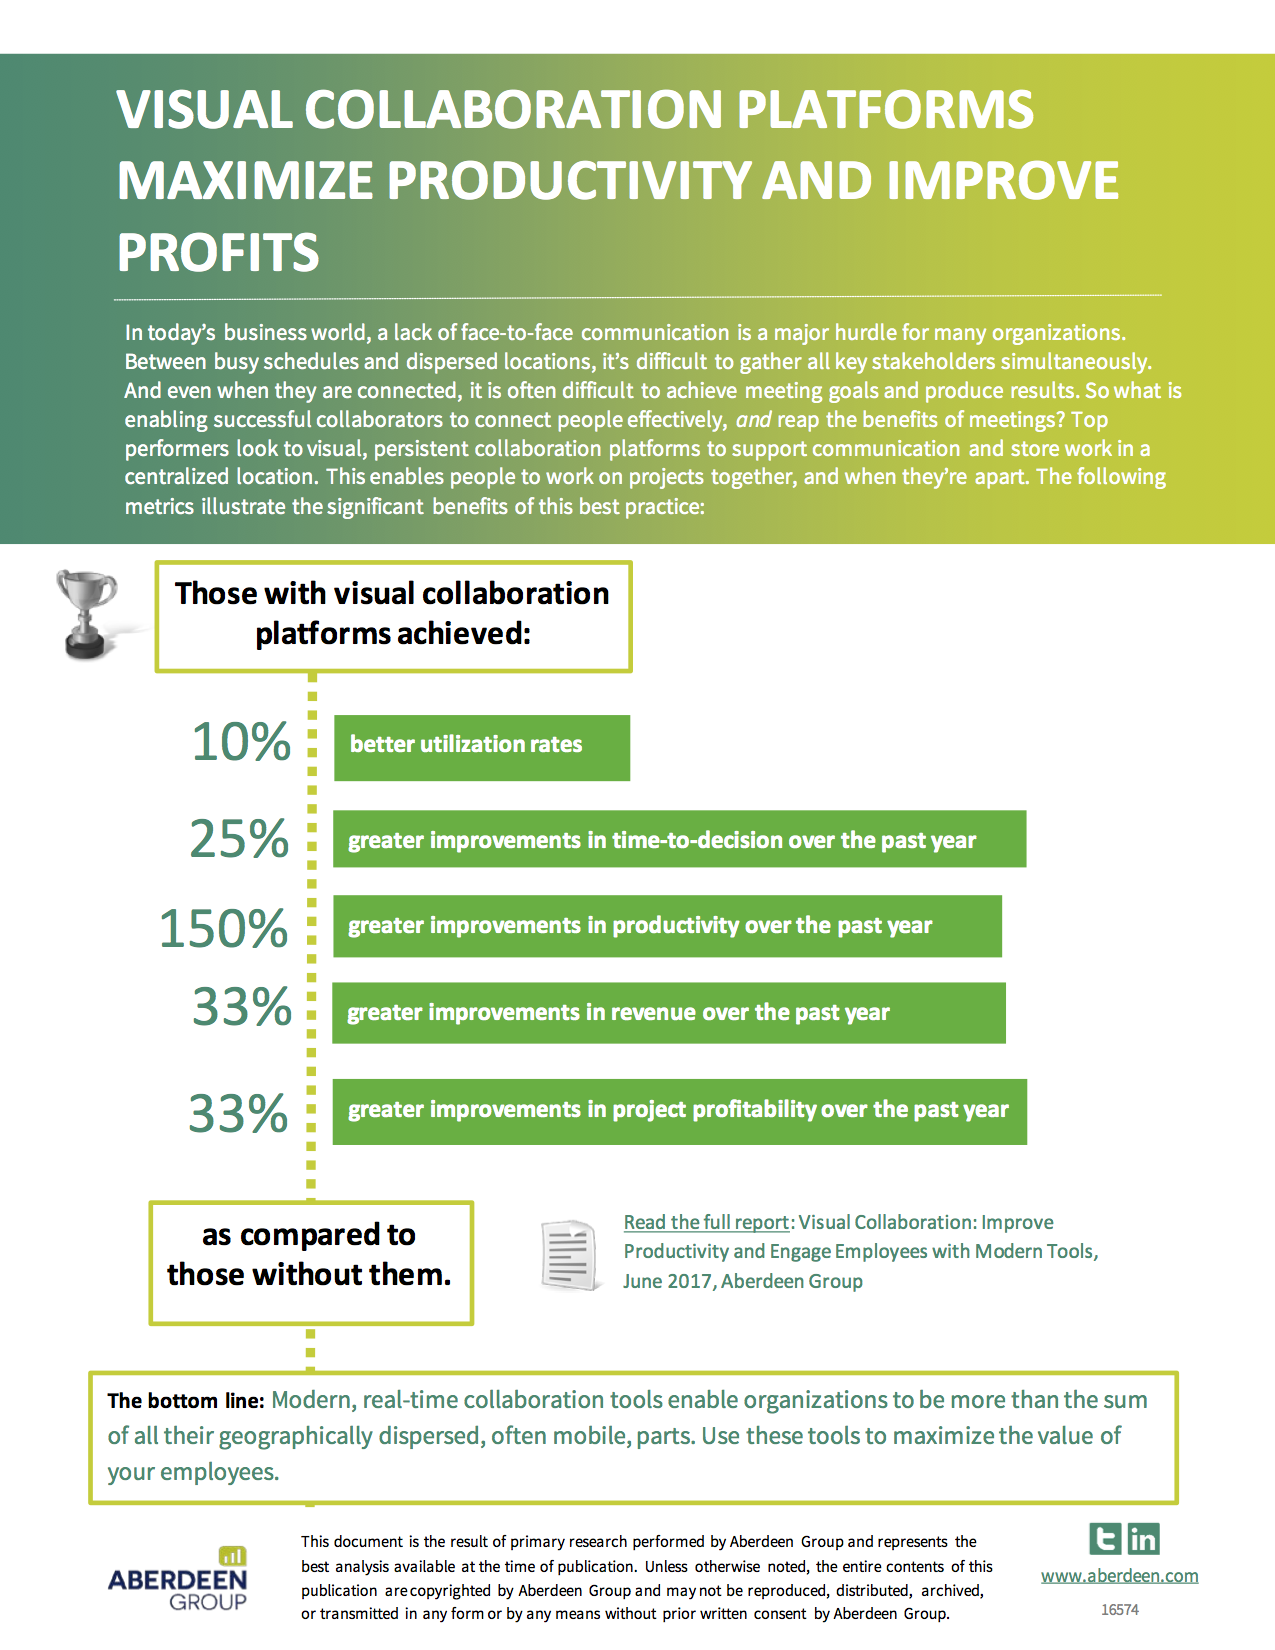 Visual Collaboration Platforms Maximize Productivity and Improve Profits